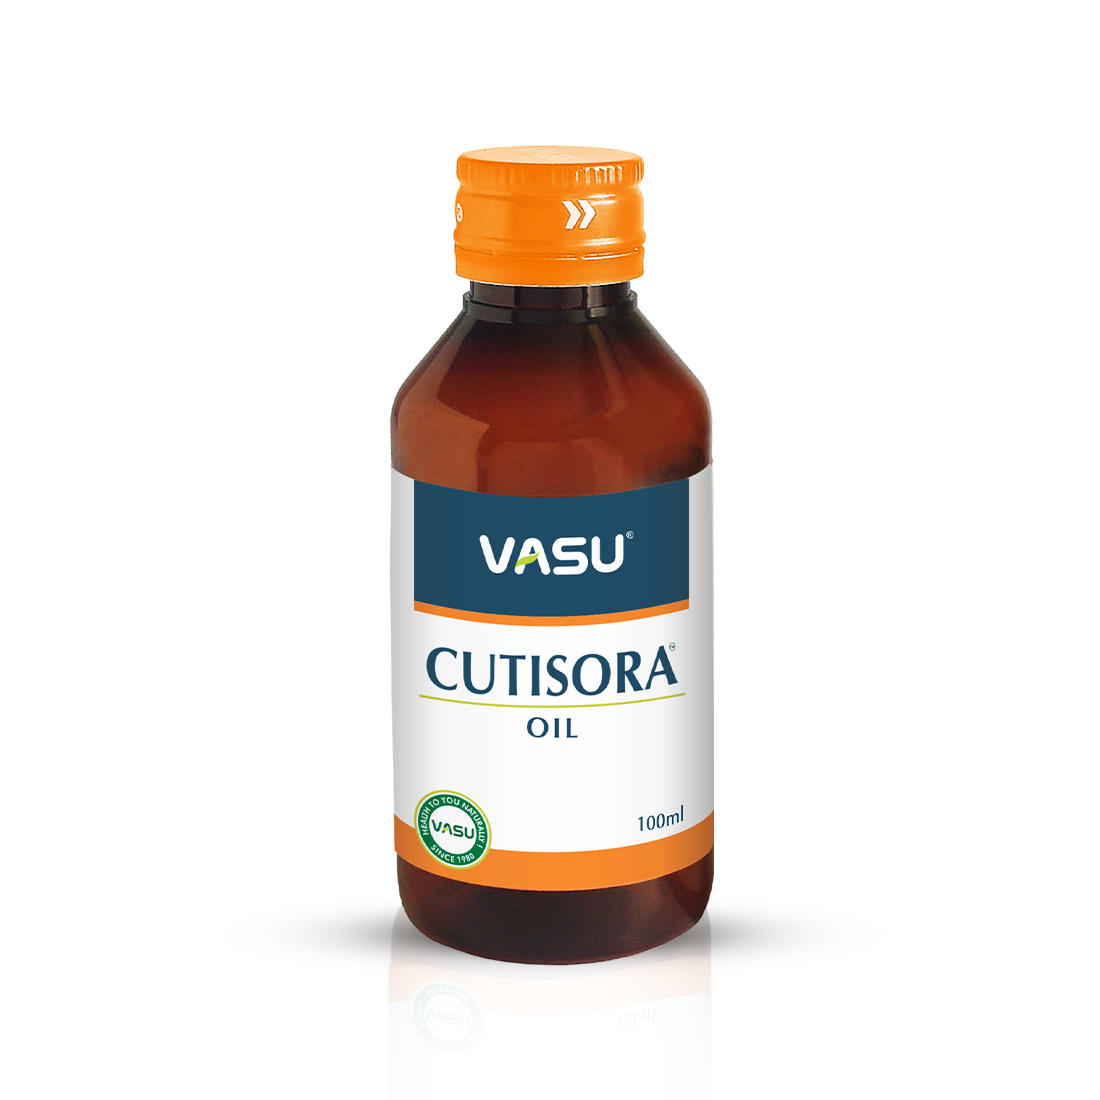 Buy Vasu Cutisora Oil at Best Price Online